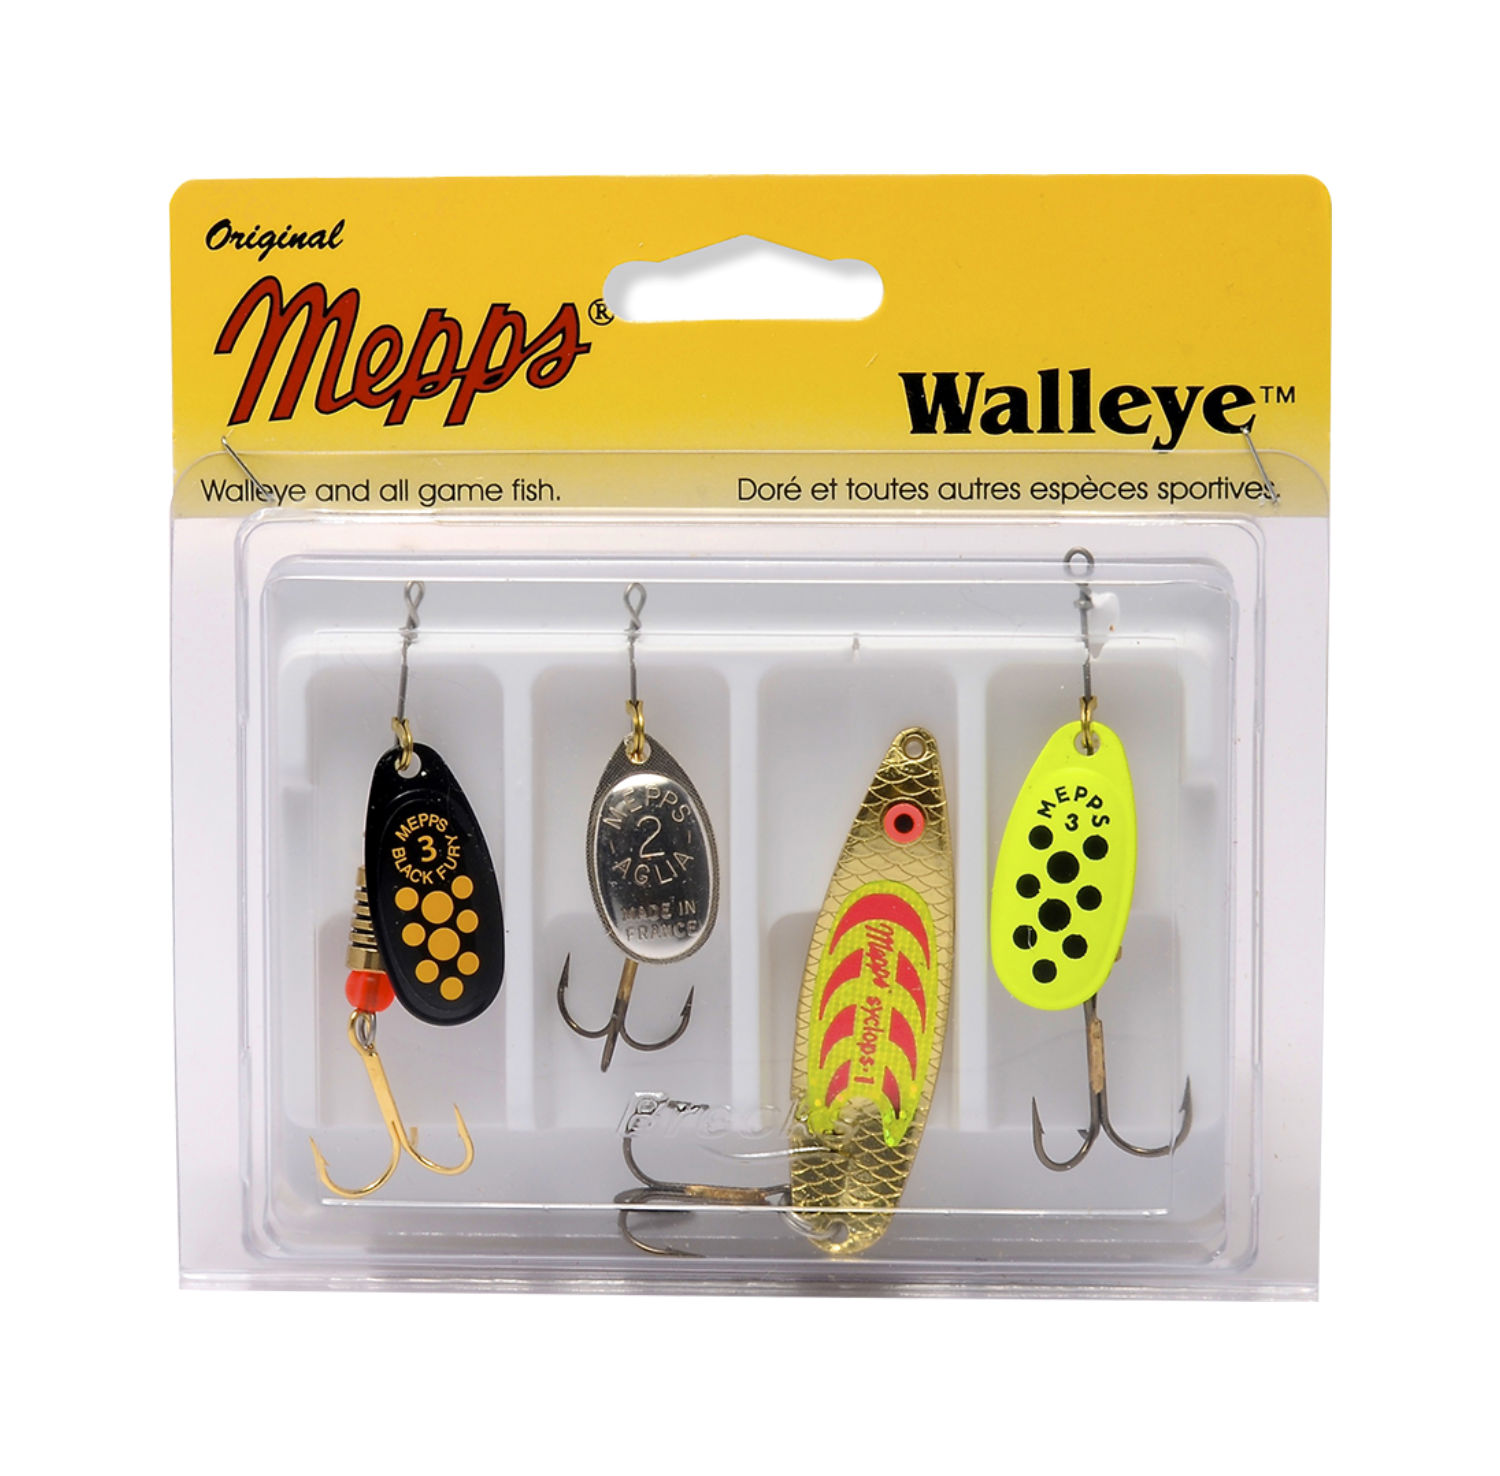 Mepps Walleye 4-Pack